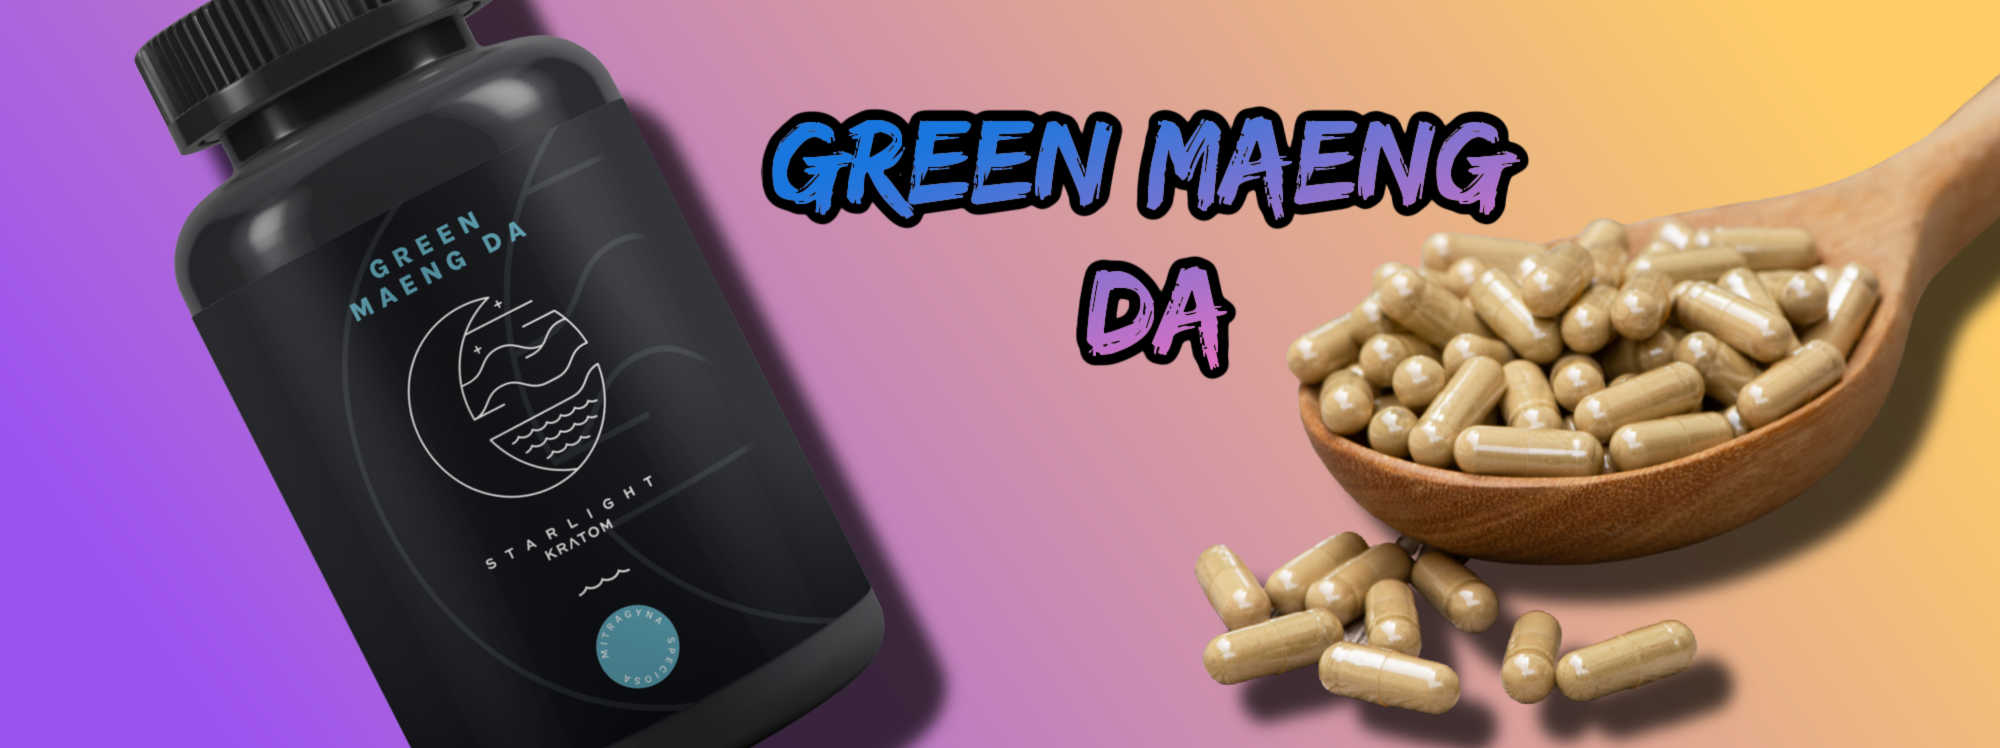 image of green maeng da